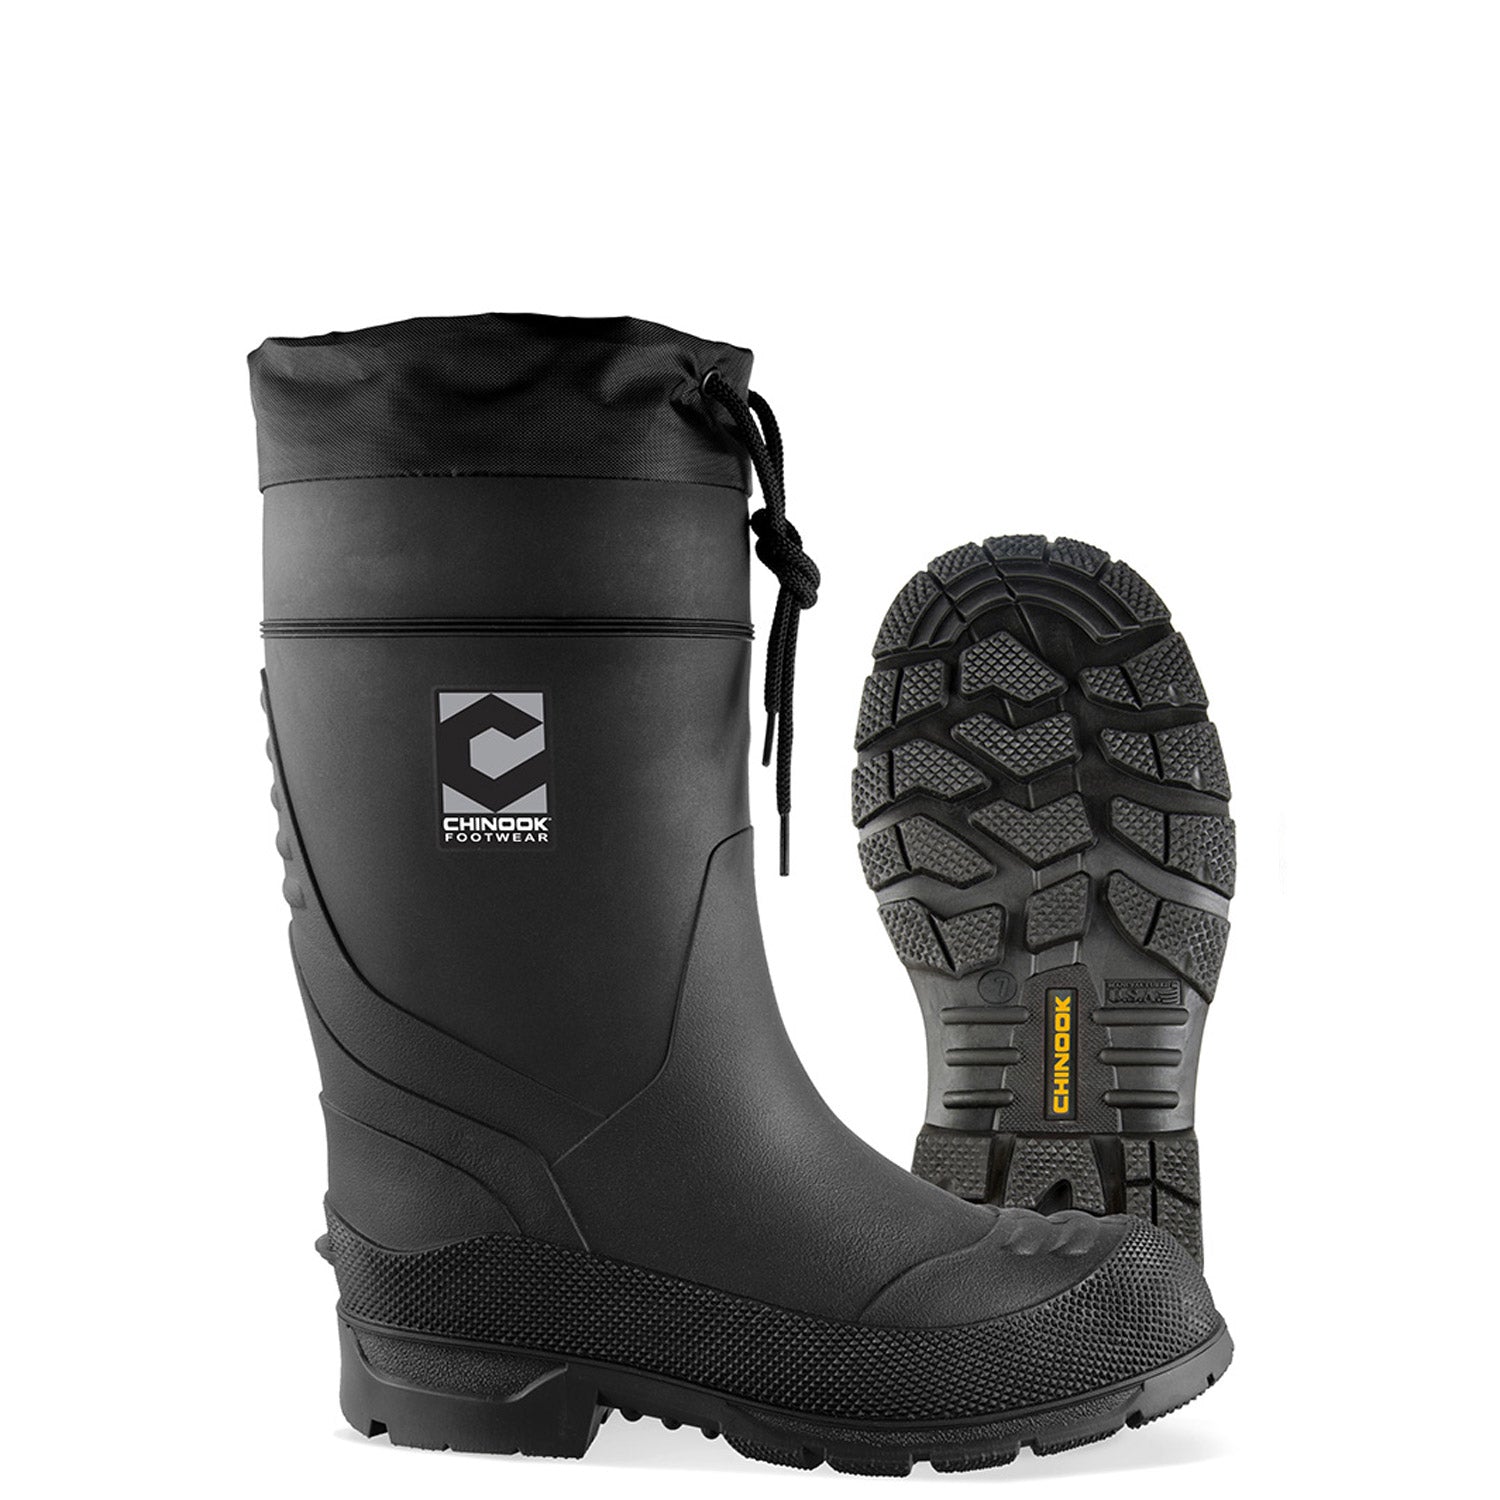 Chinook Footwear Rubber Boot - Work World - Workwear, Work Boots, Safety Gear